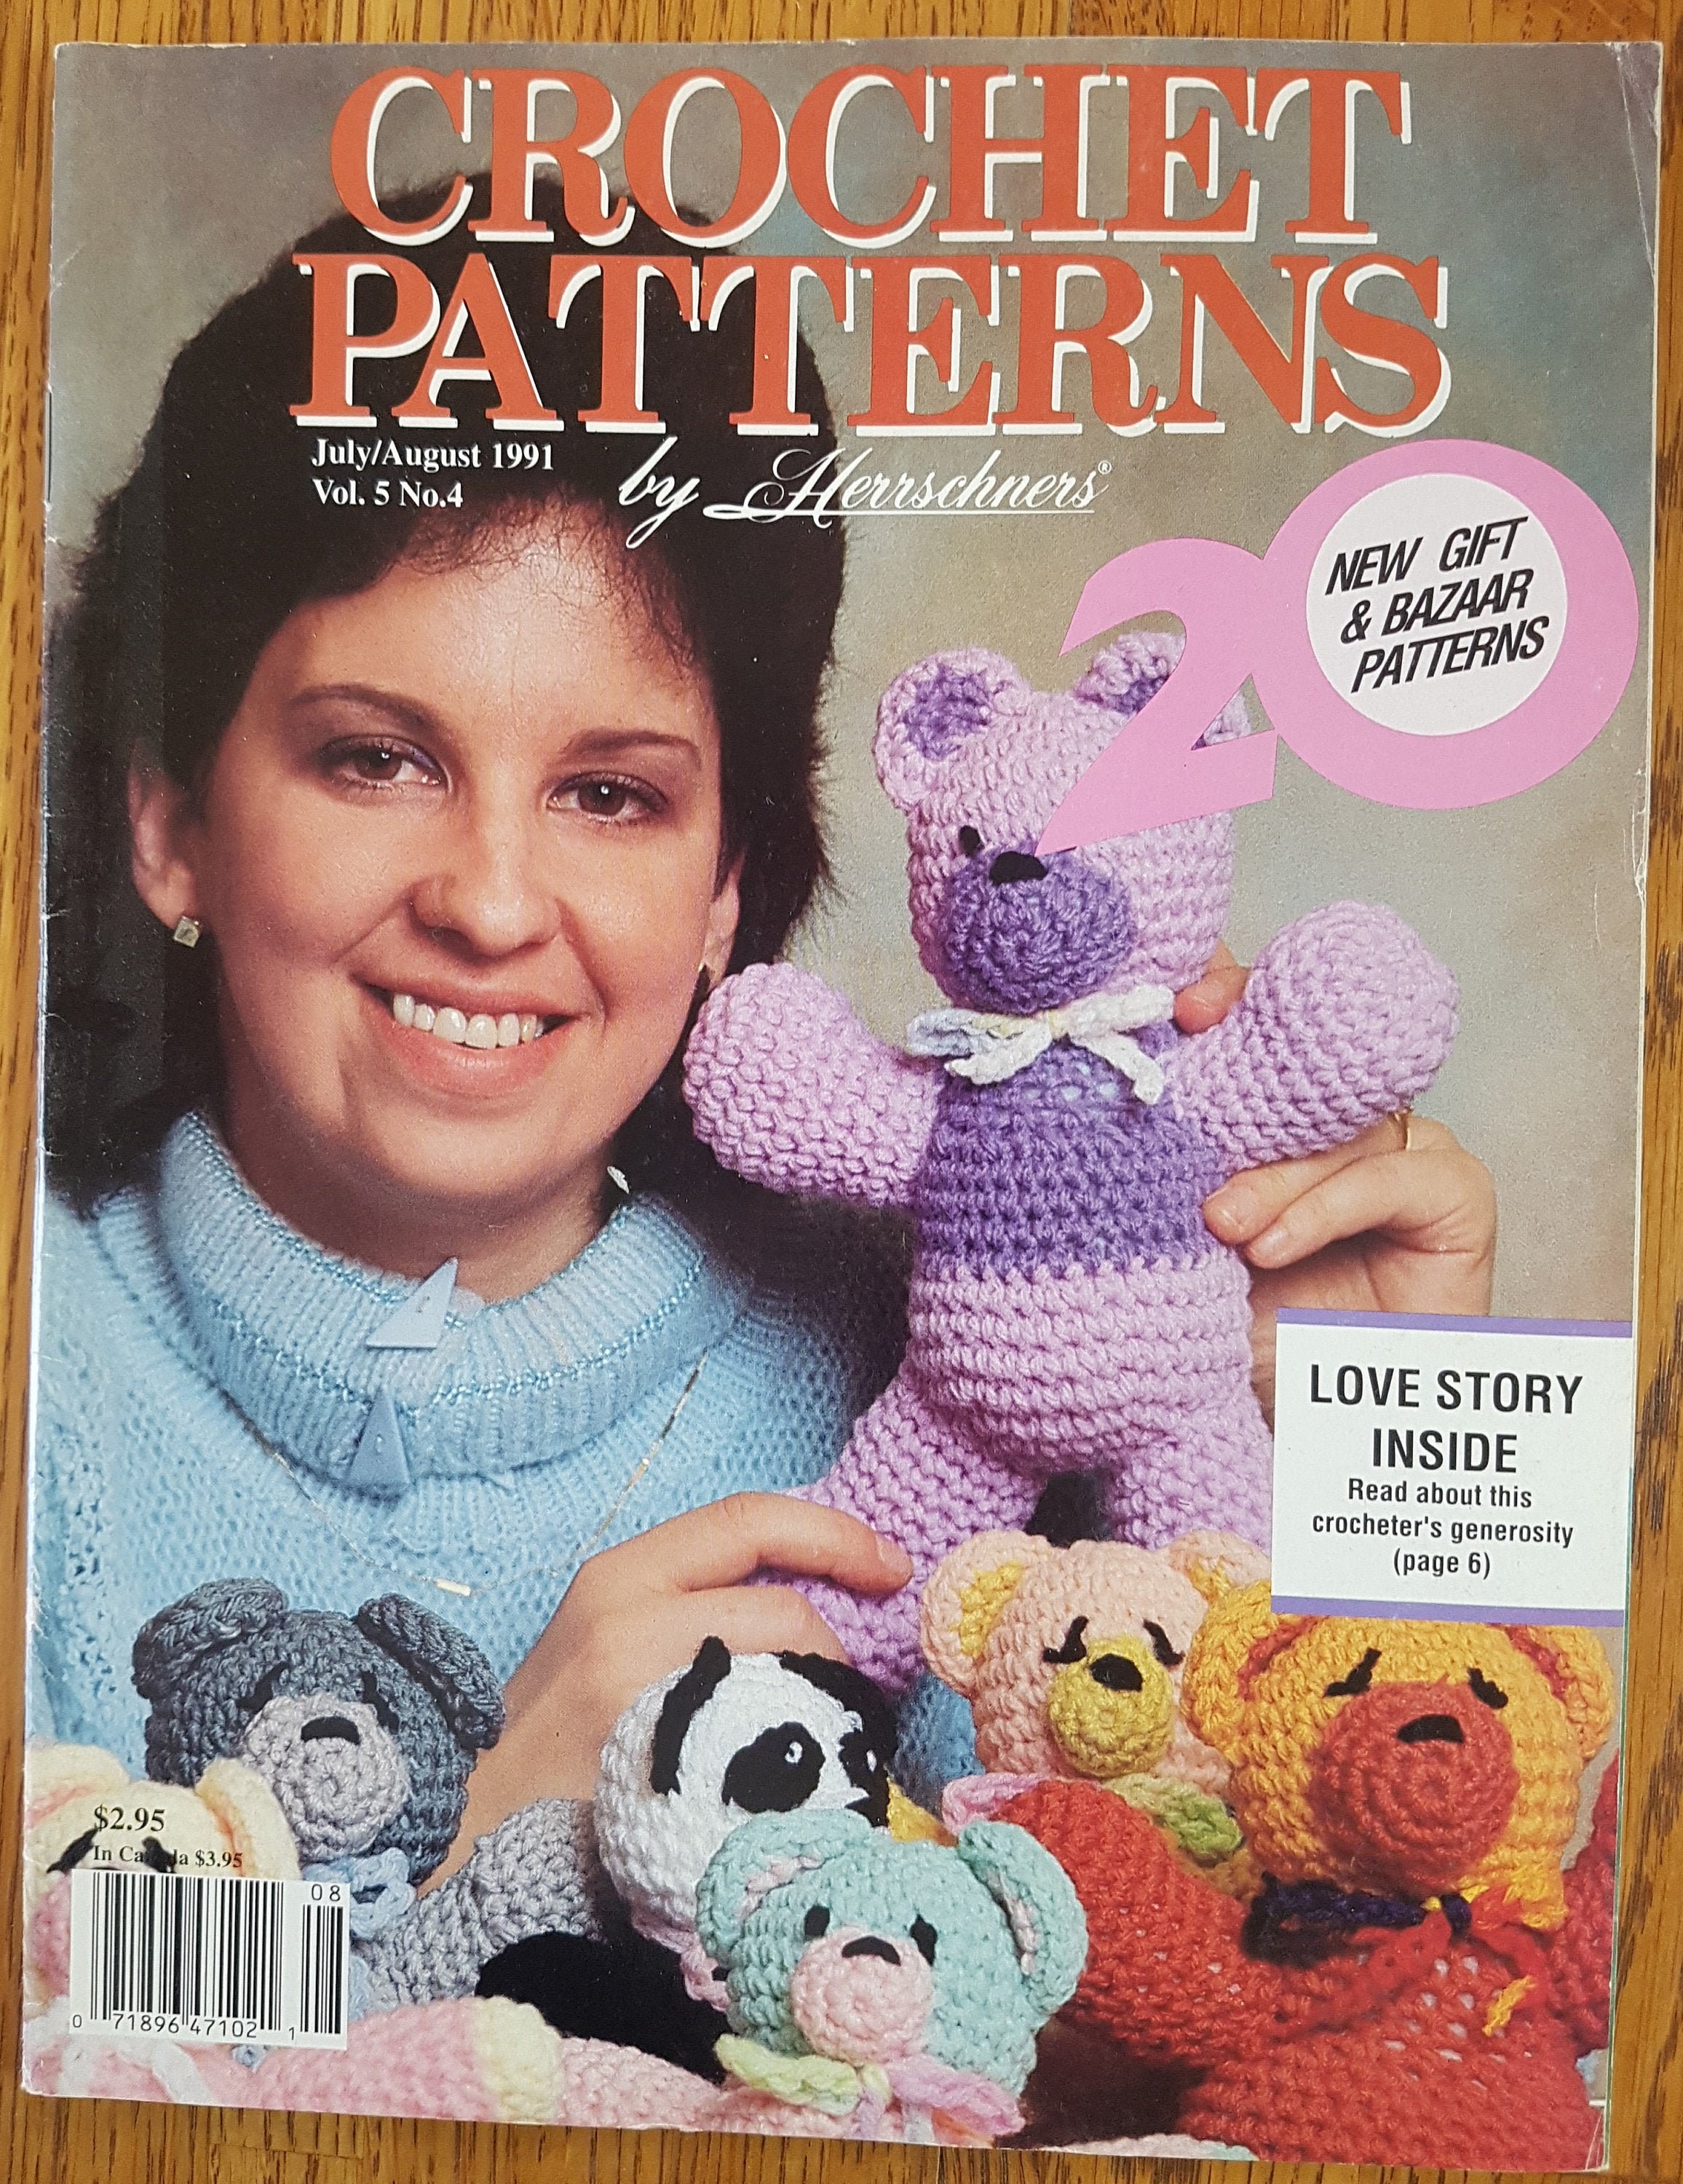 Herrschners - Knit & Crochet - Books & Patterns - Books - Page 1